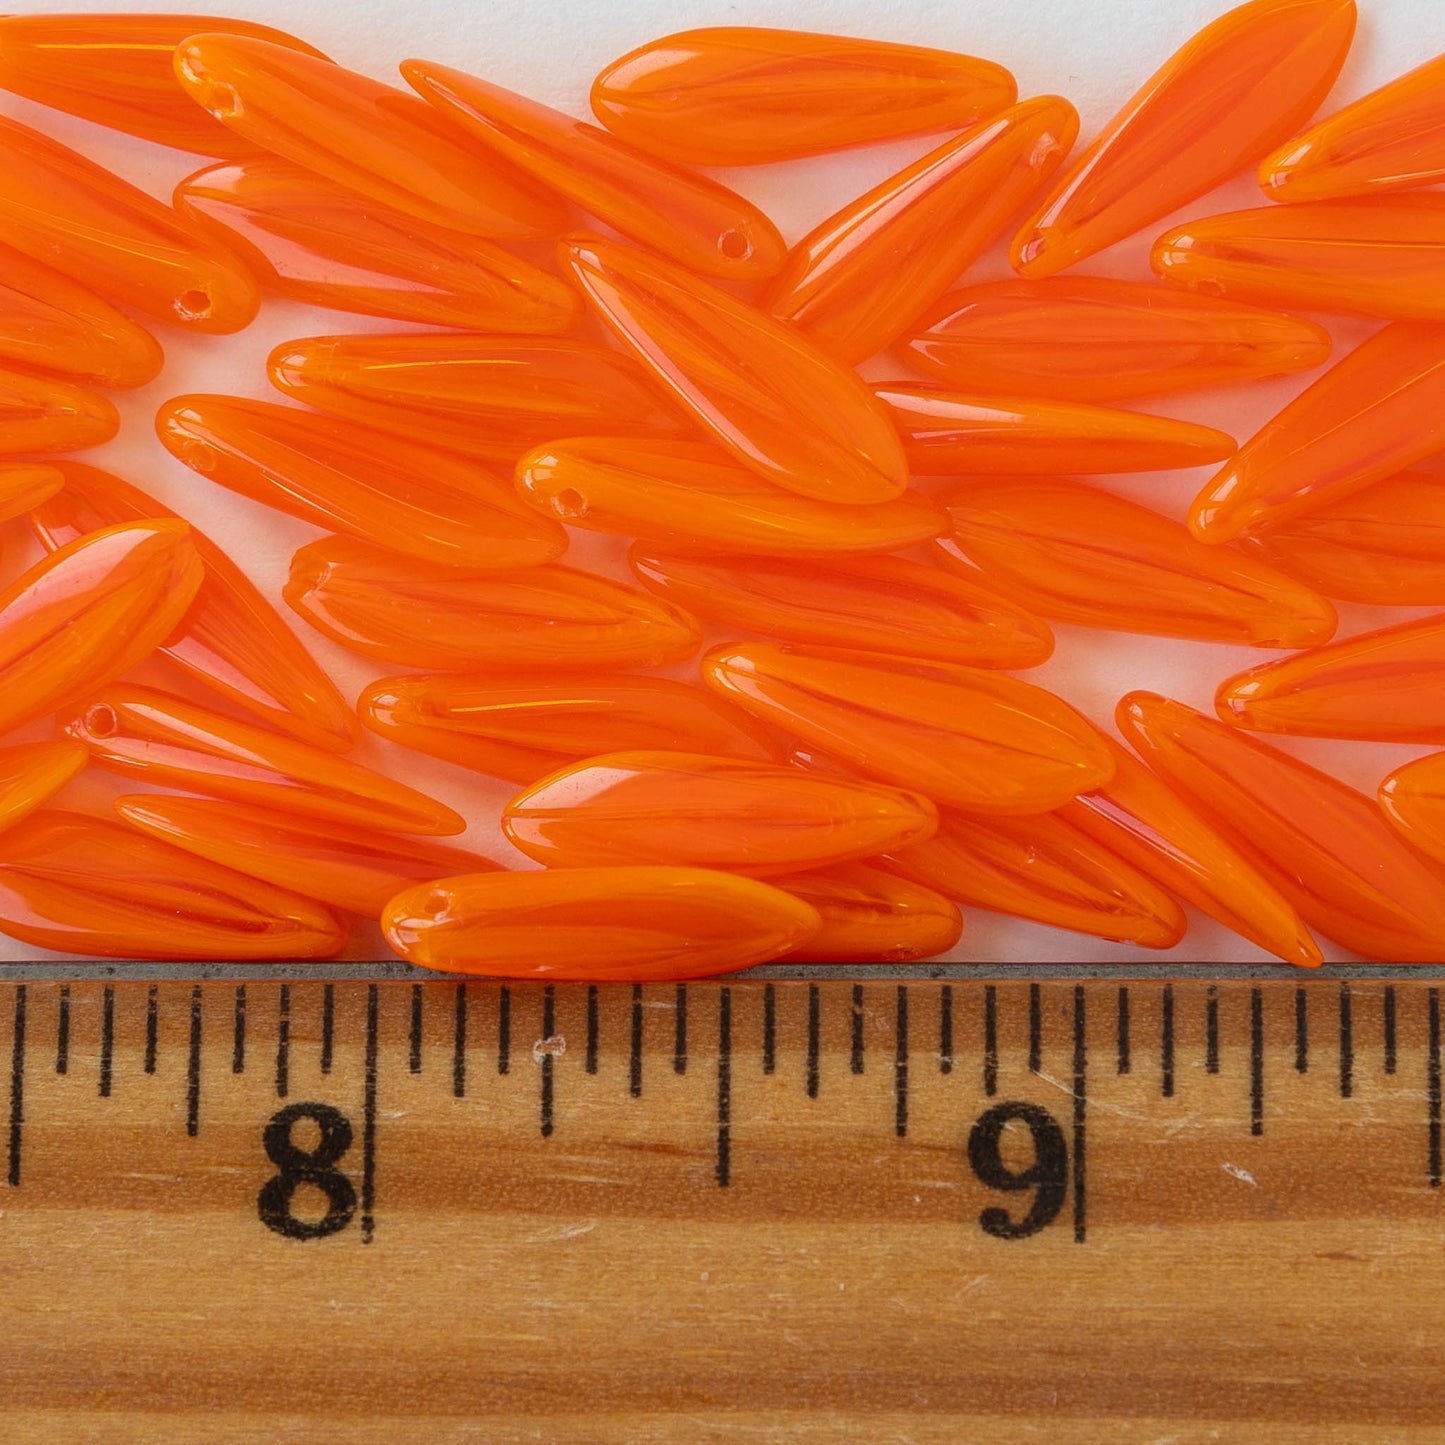 16mm Dagger Beads - Orange Opaline - 60 beads